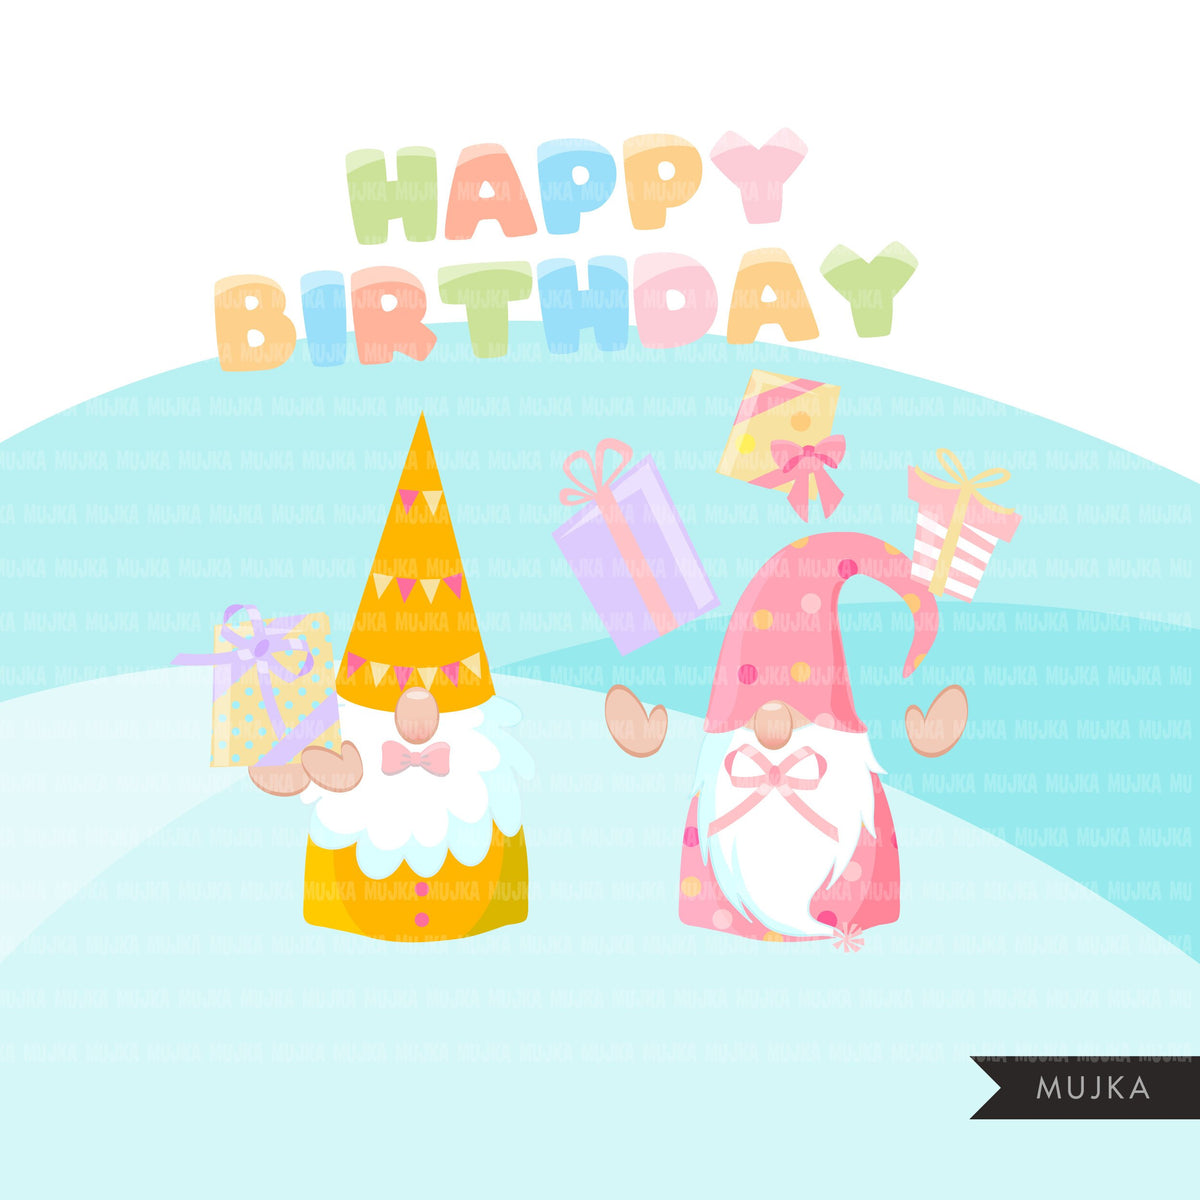 Download Birthday gnomes Clipart, birthday graphics, pastel, rainbow birthday p - MUJKA CLIPARTS